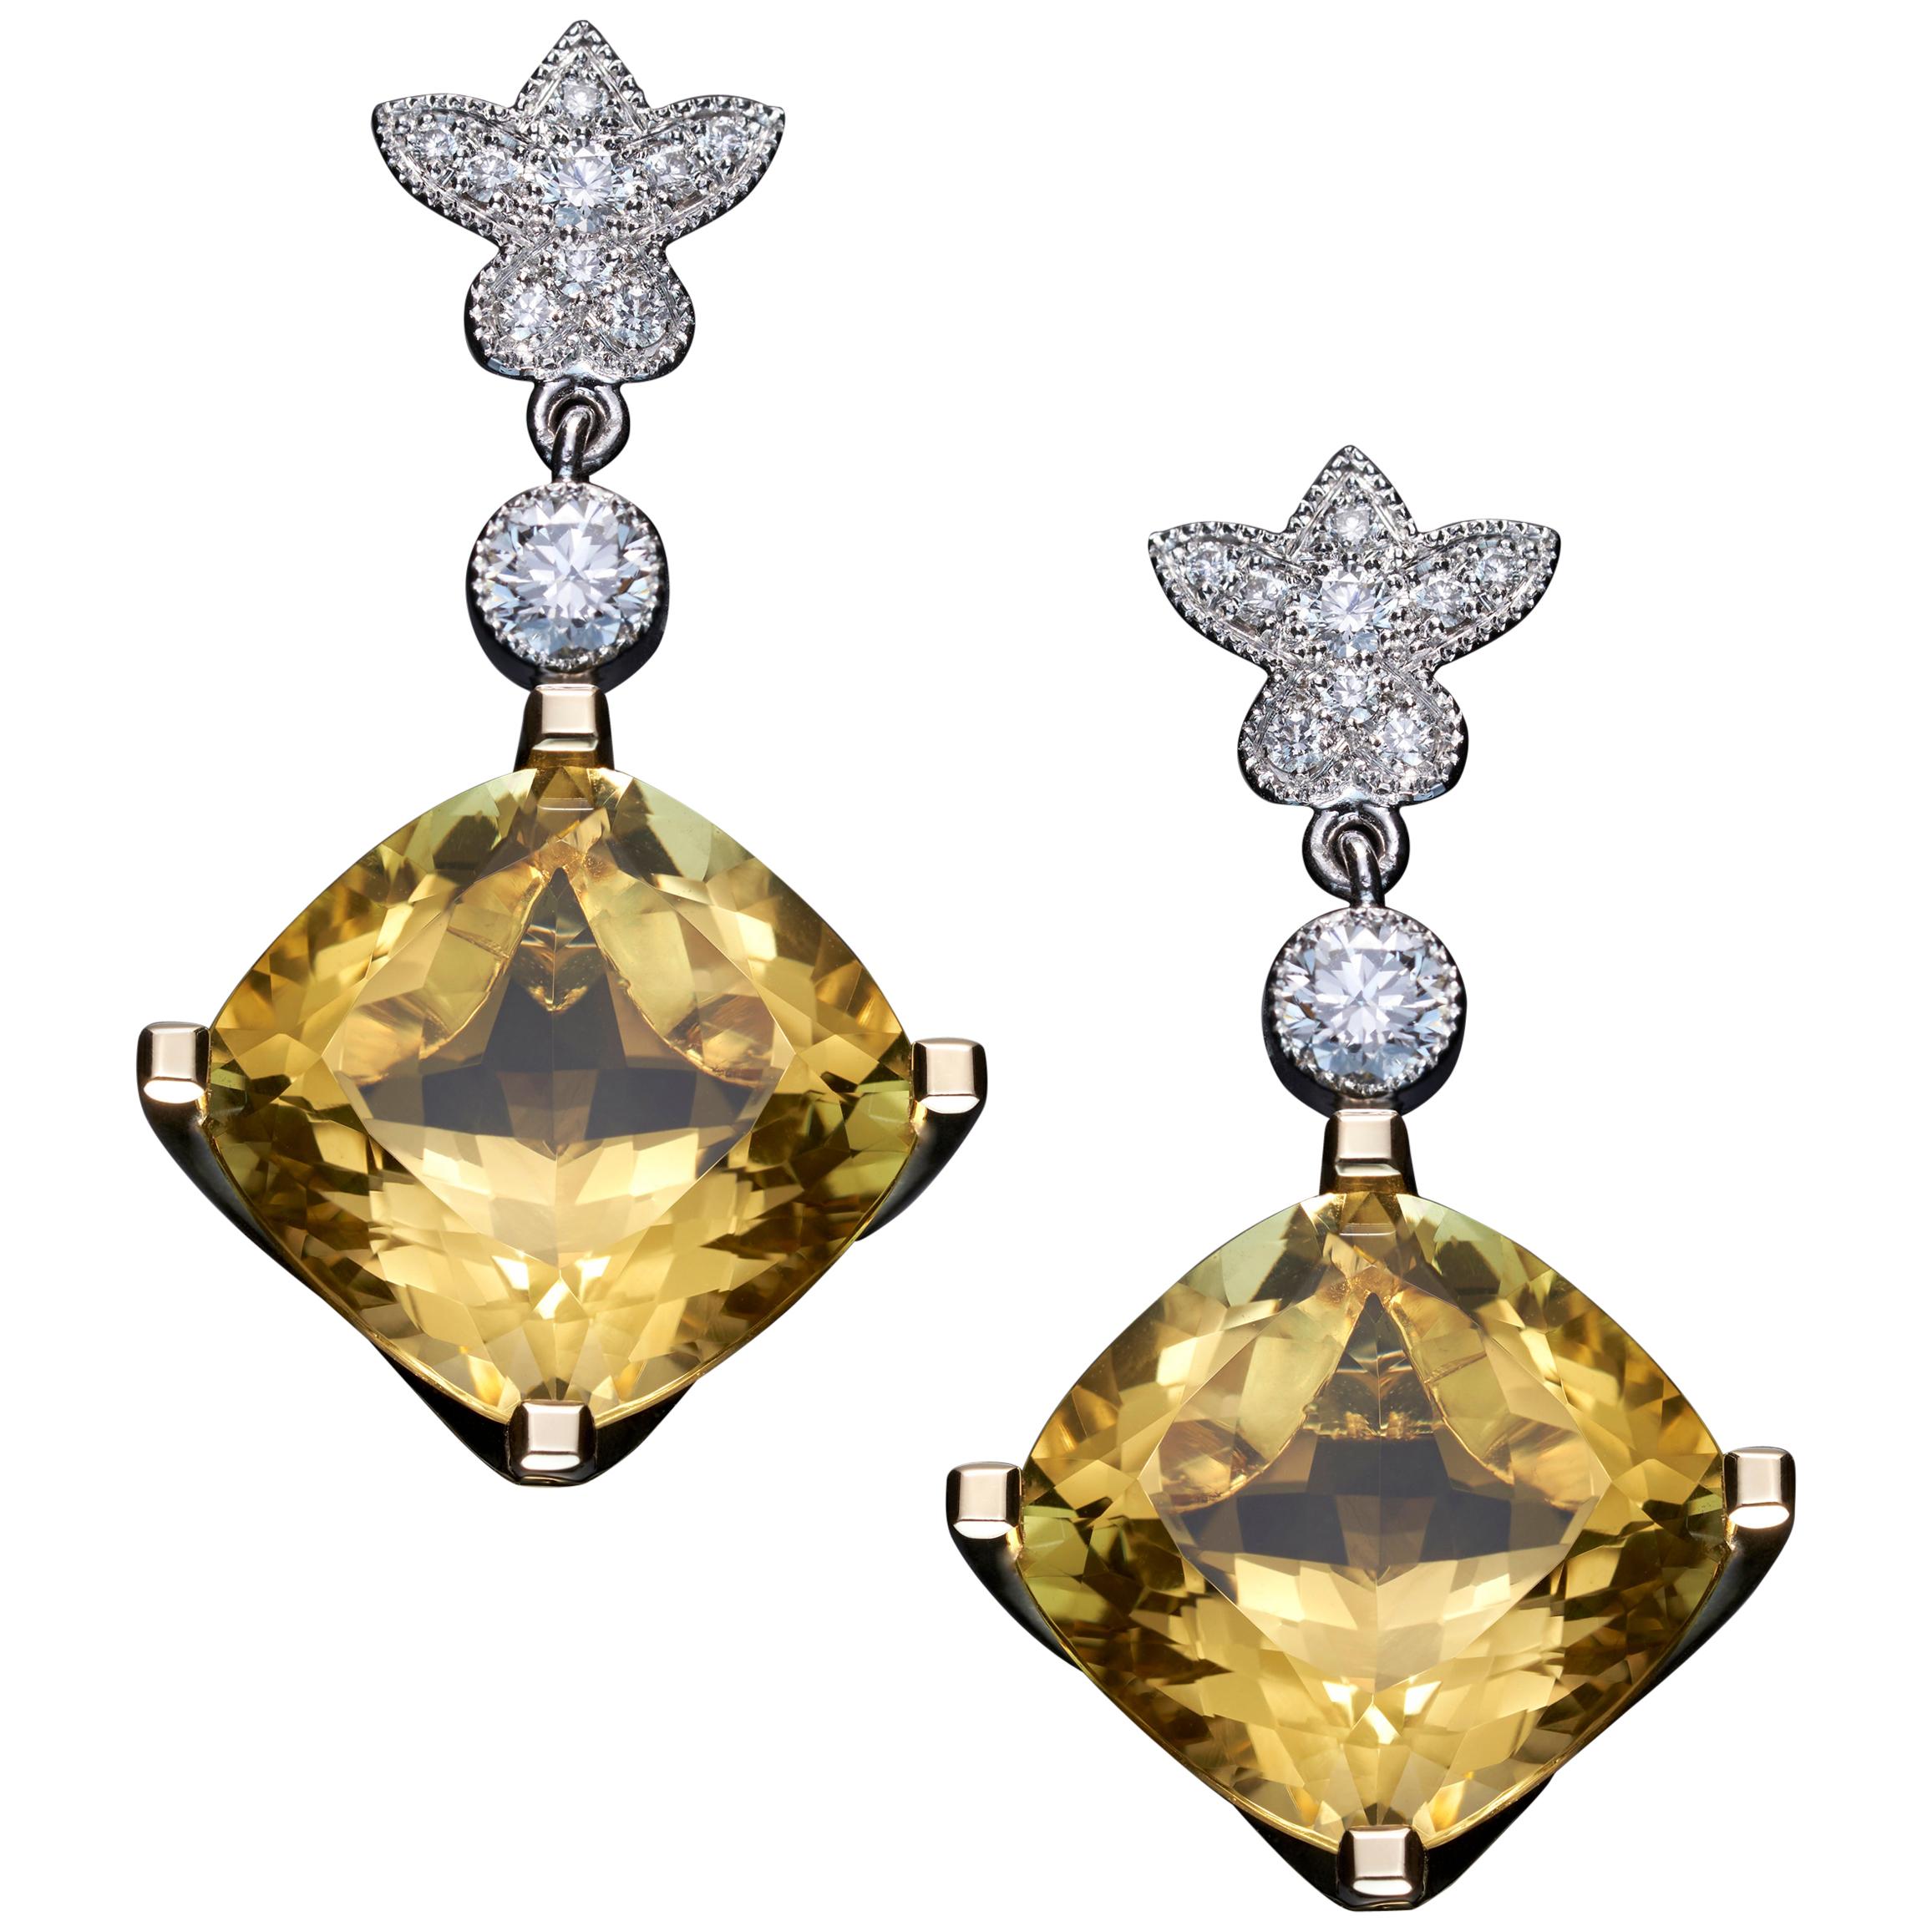 Golden Beryl and Platinum Drop Earrings